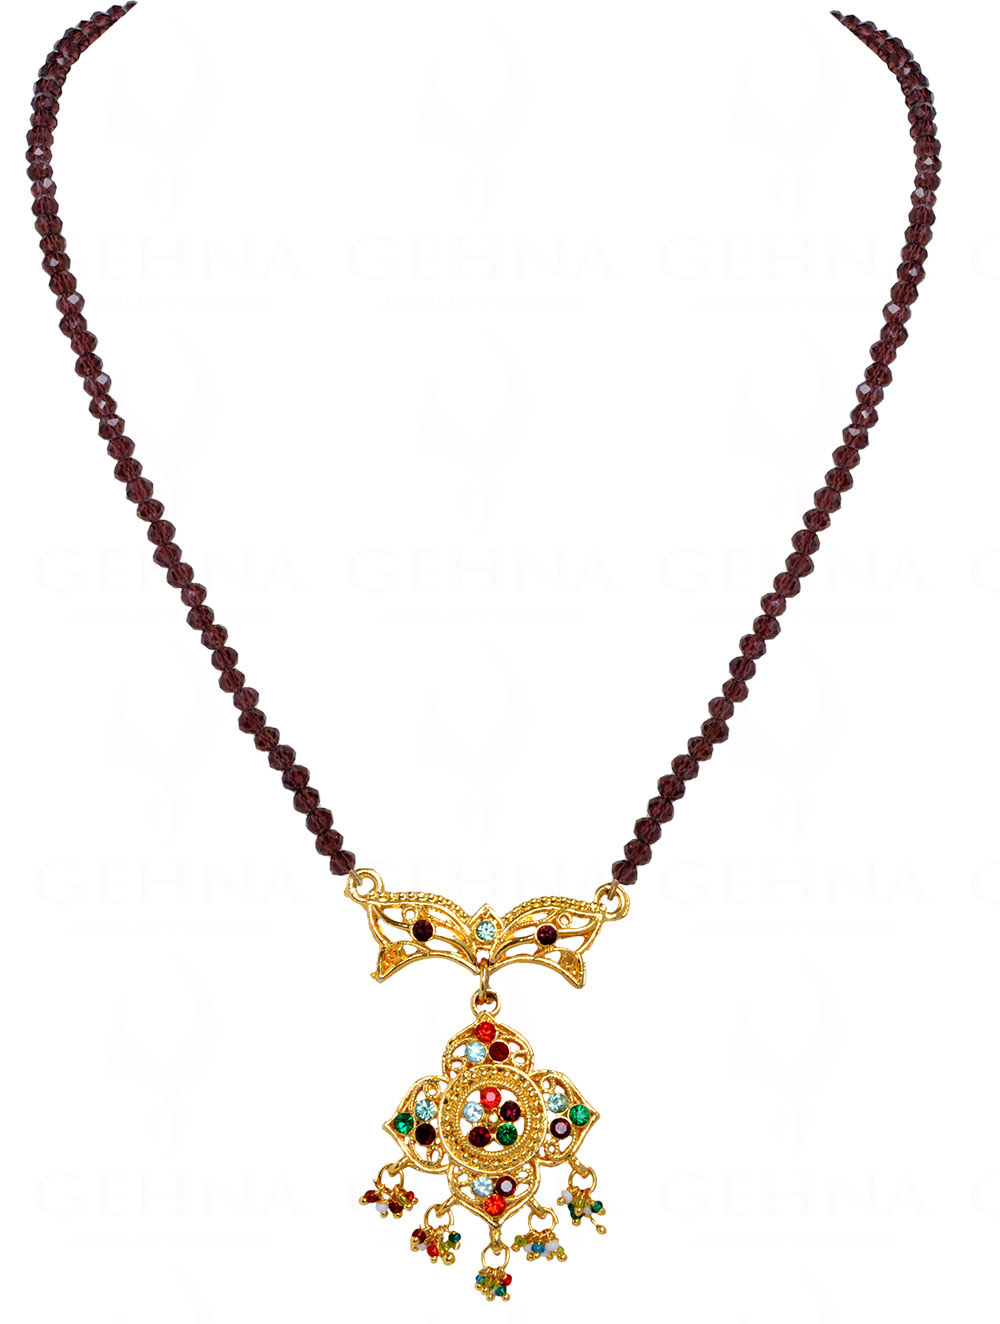 Garnet Necklace : January Birthstone - Danique Jewelry